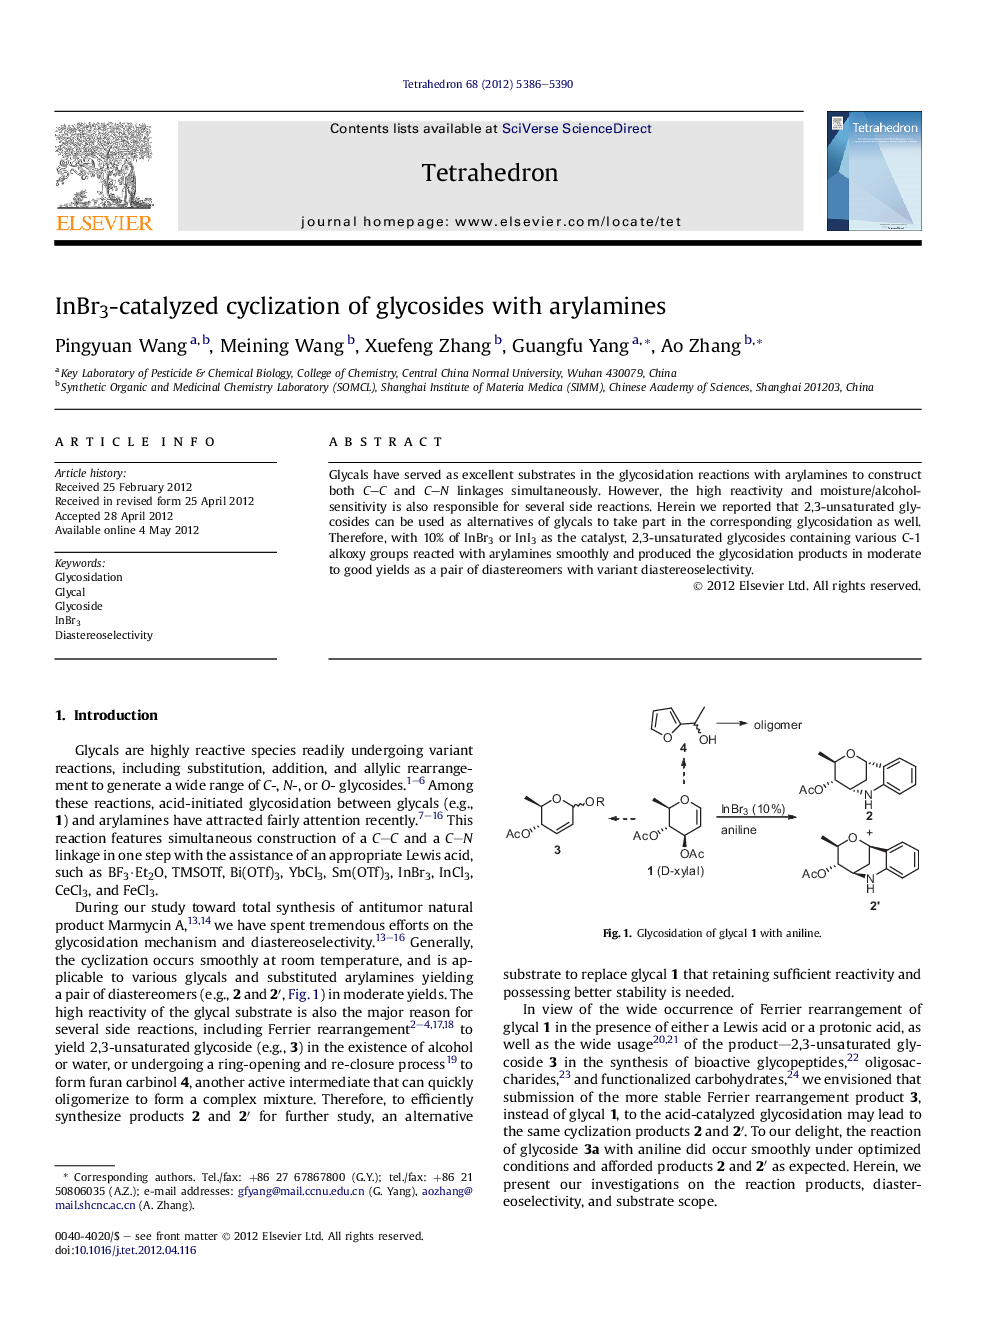 InBr3-catalyzed cyclization of glycosides with arylamines